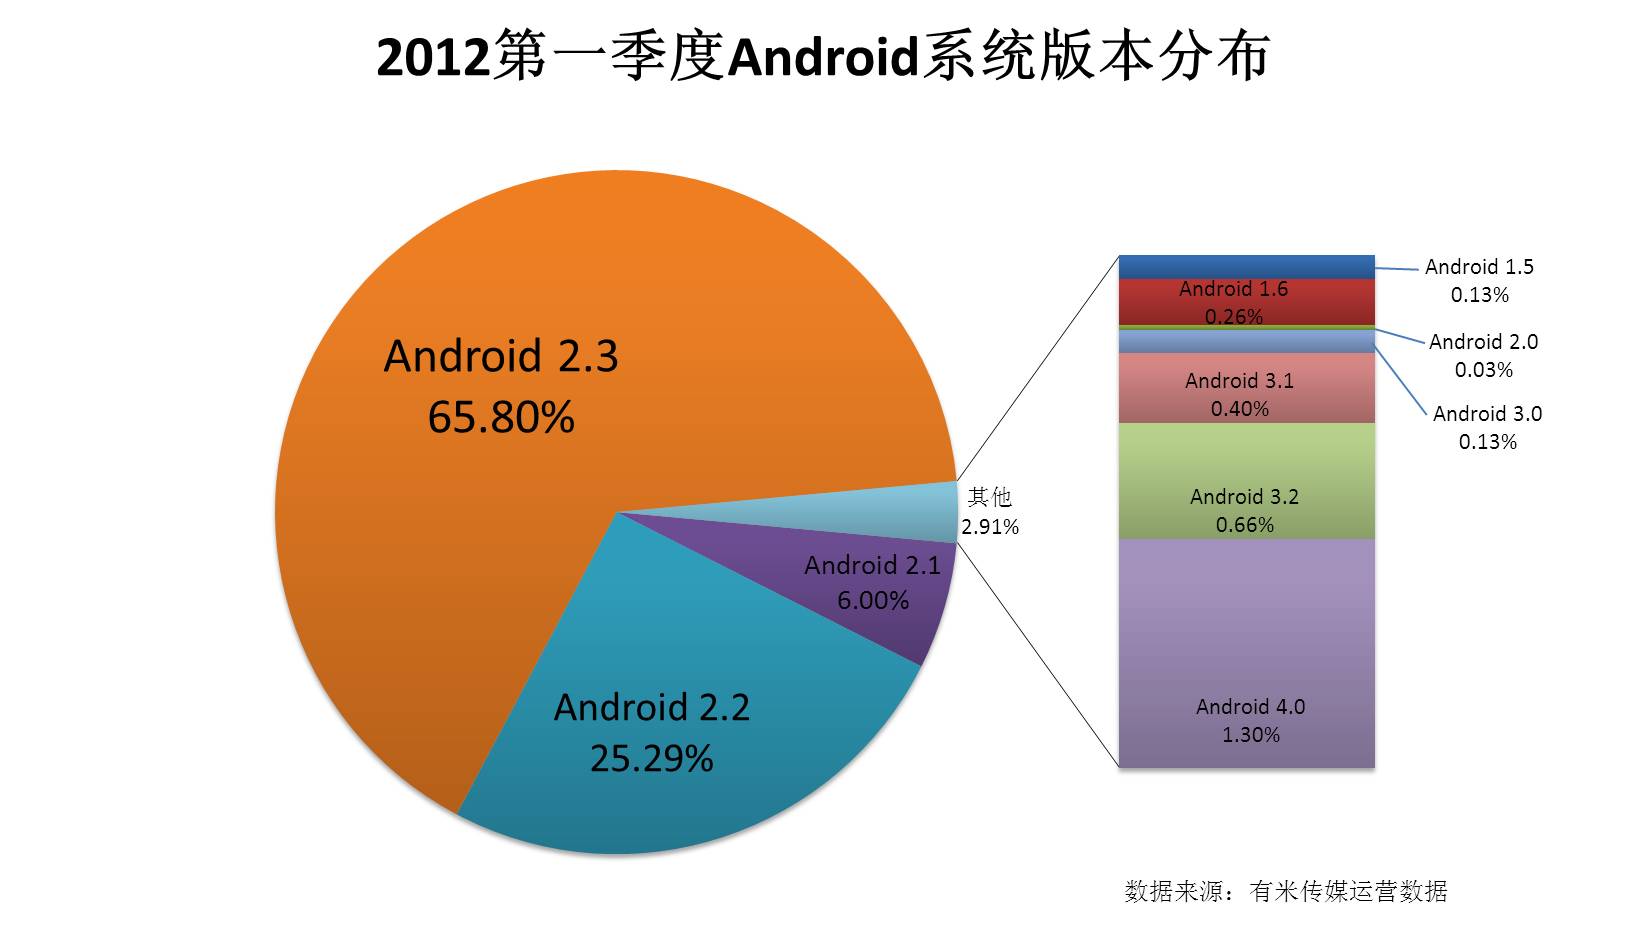 2012***季度Android系统版本分布